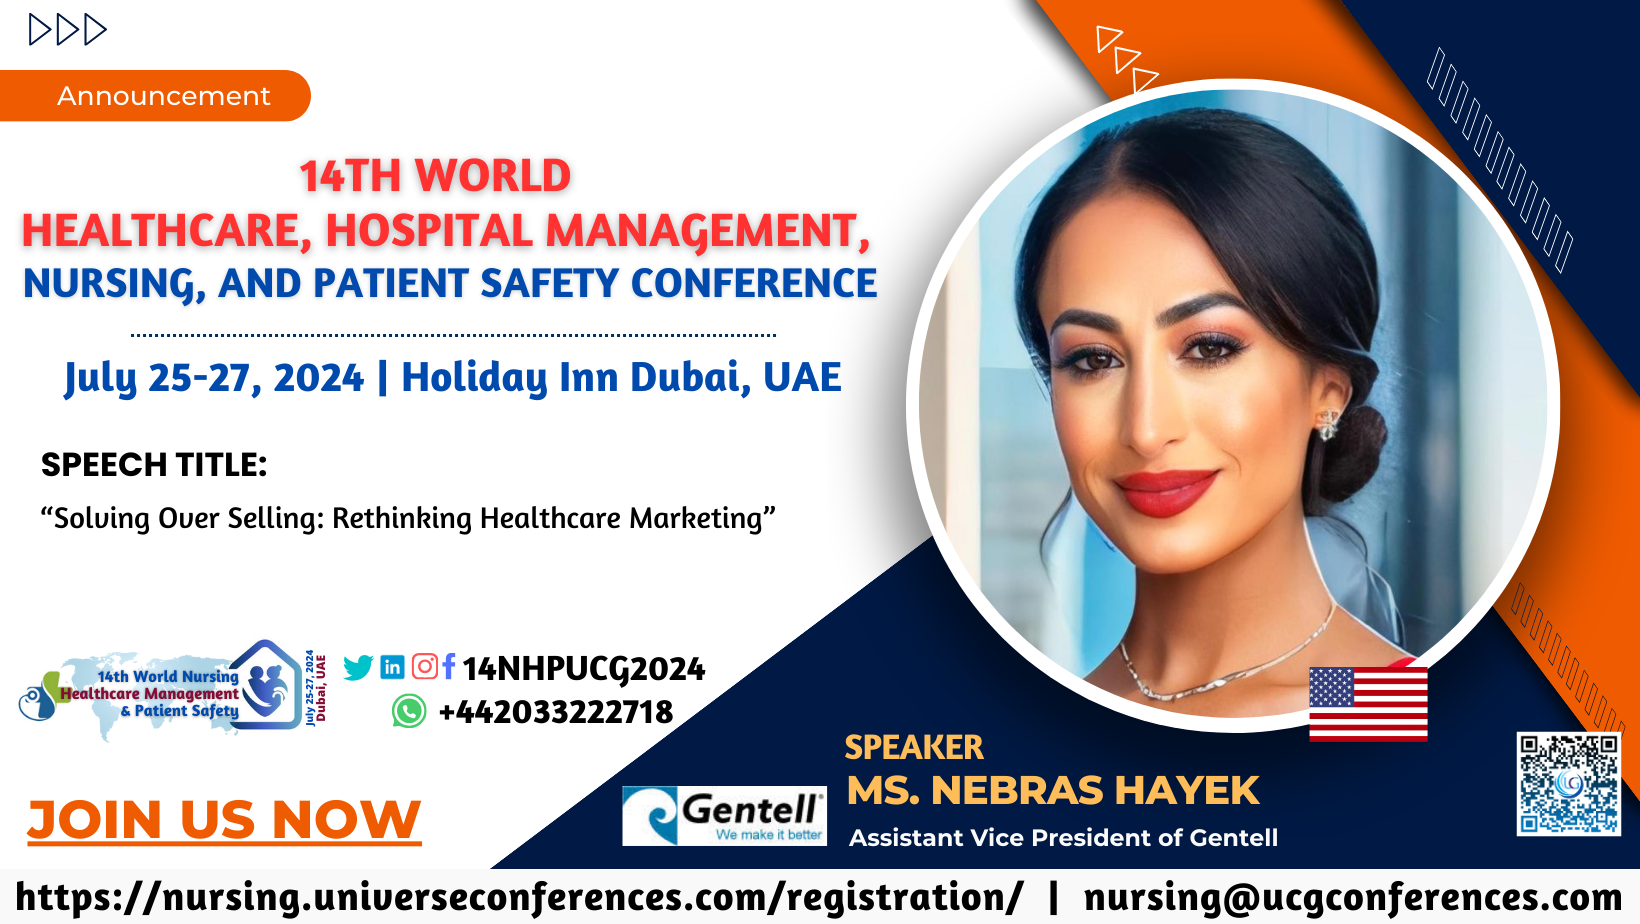 Ms. Nebras Hayek_Speaker_14NHPUCG2024 in Dubai